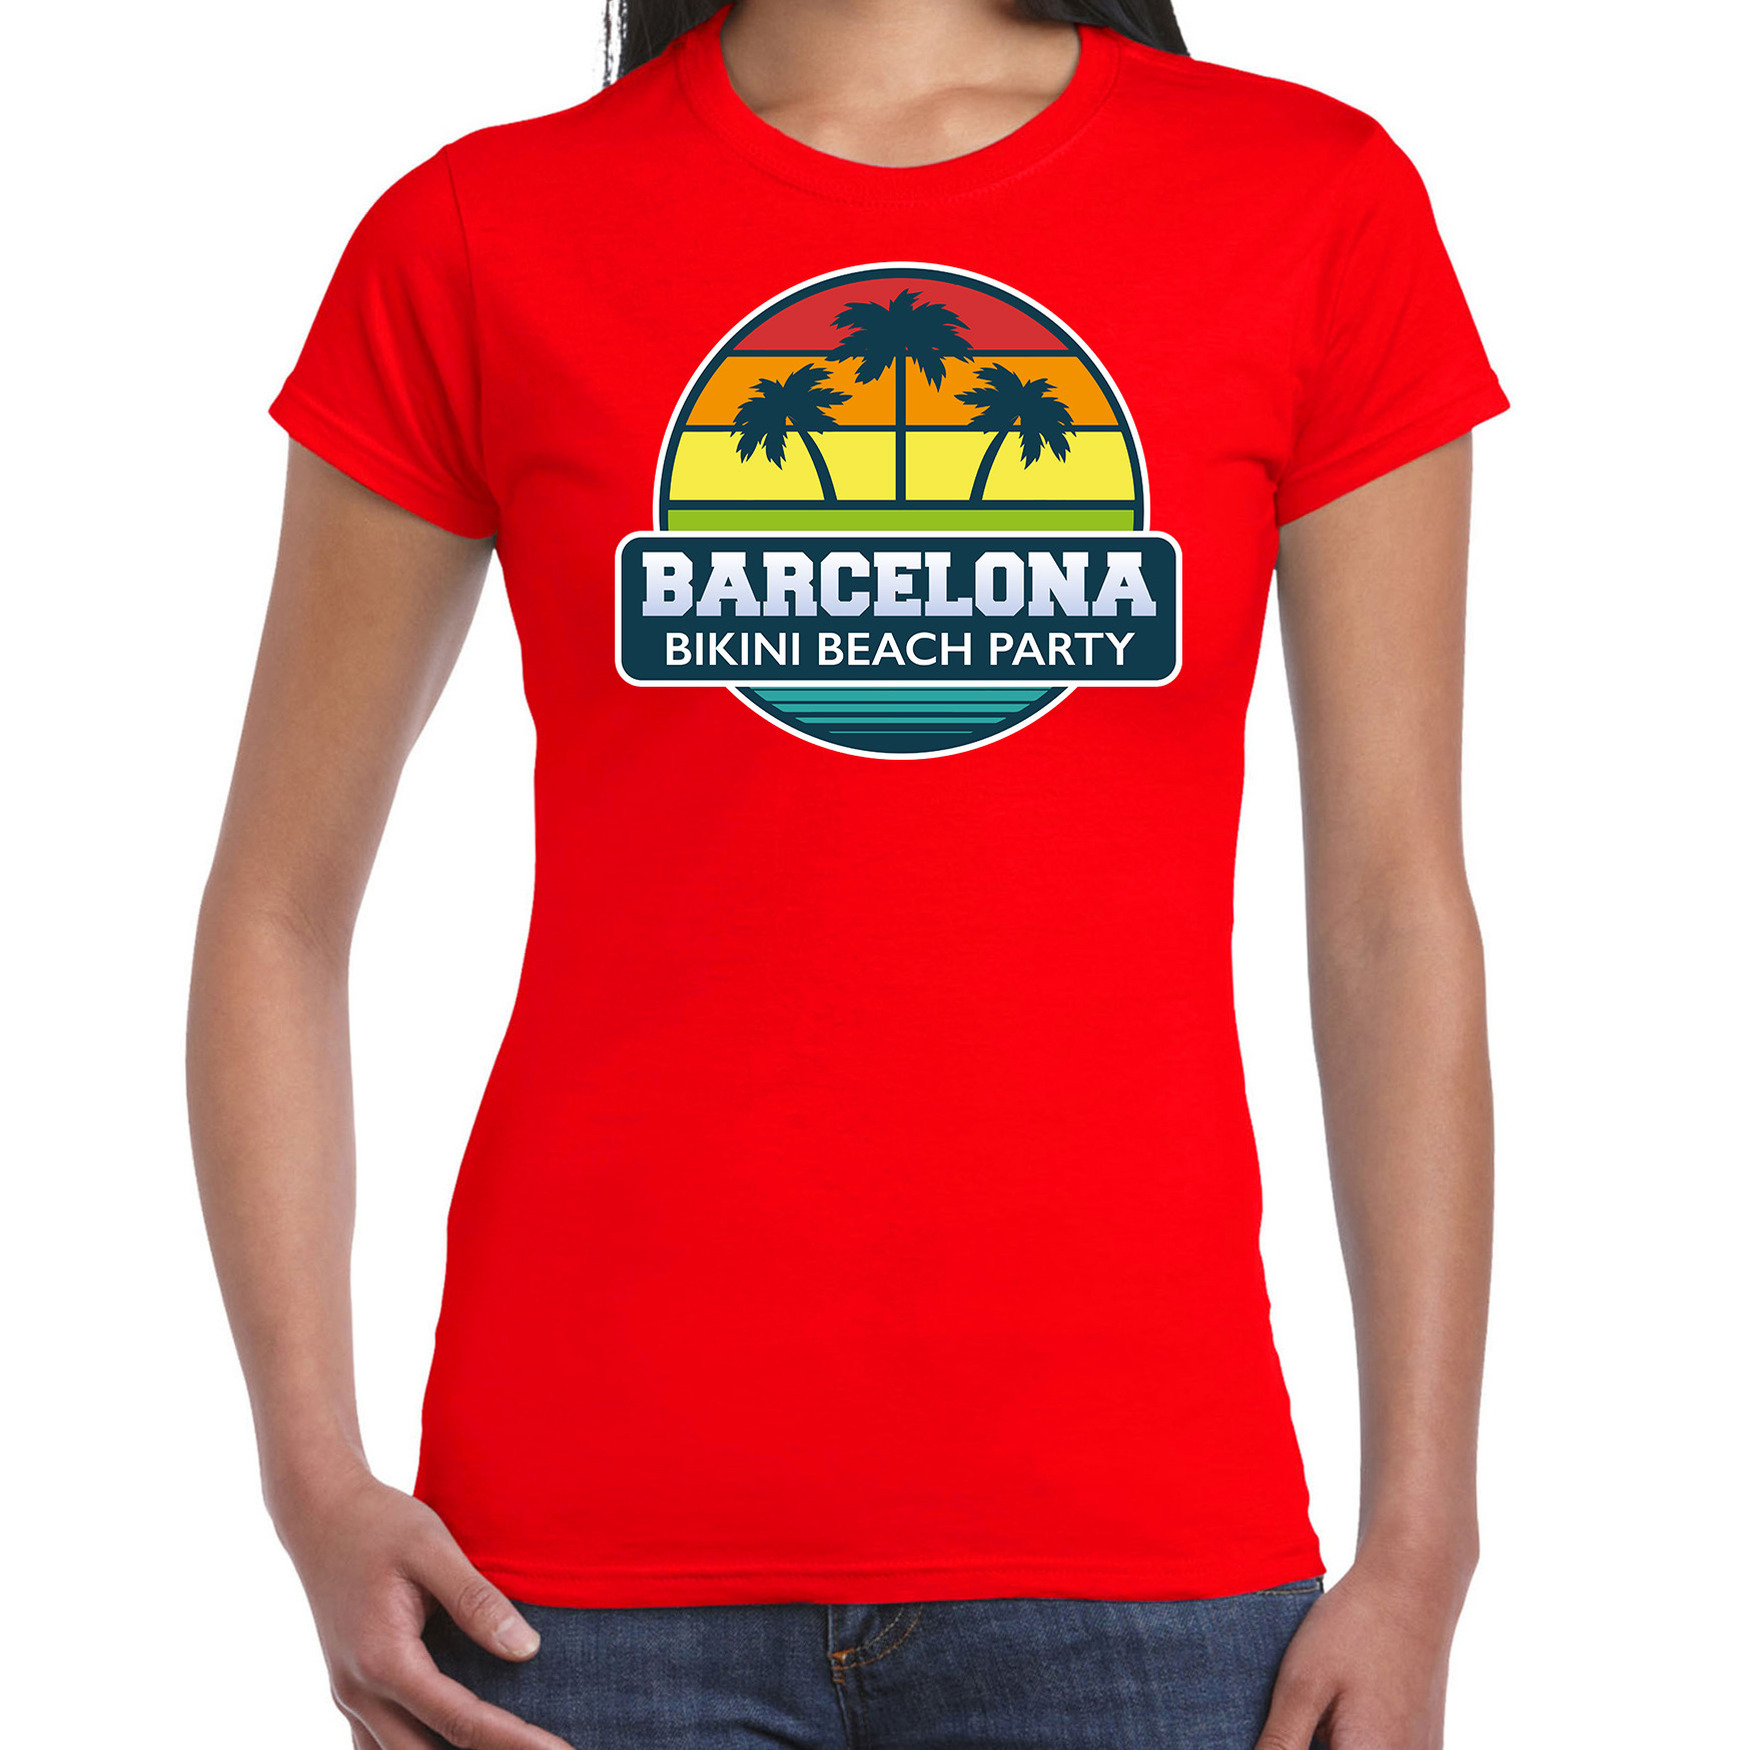 Barcelona zomer t-shirt-shirt Barcelona bikini beach party rood voor dames